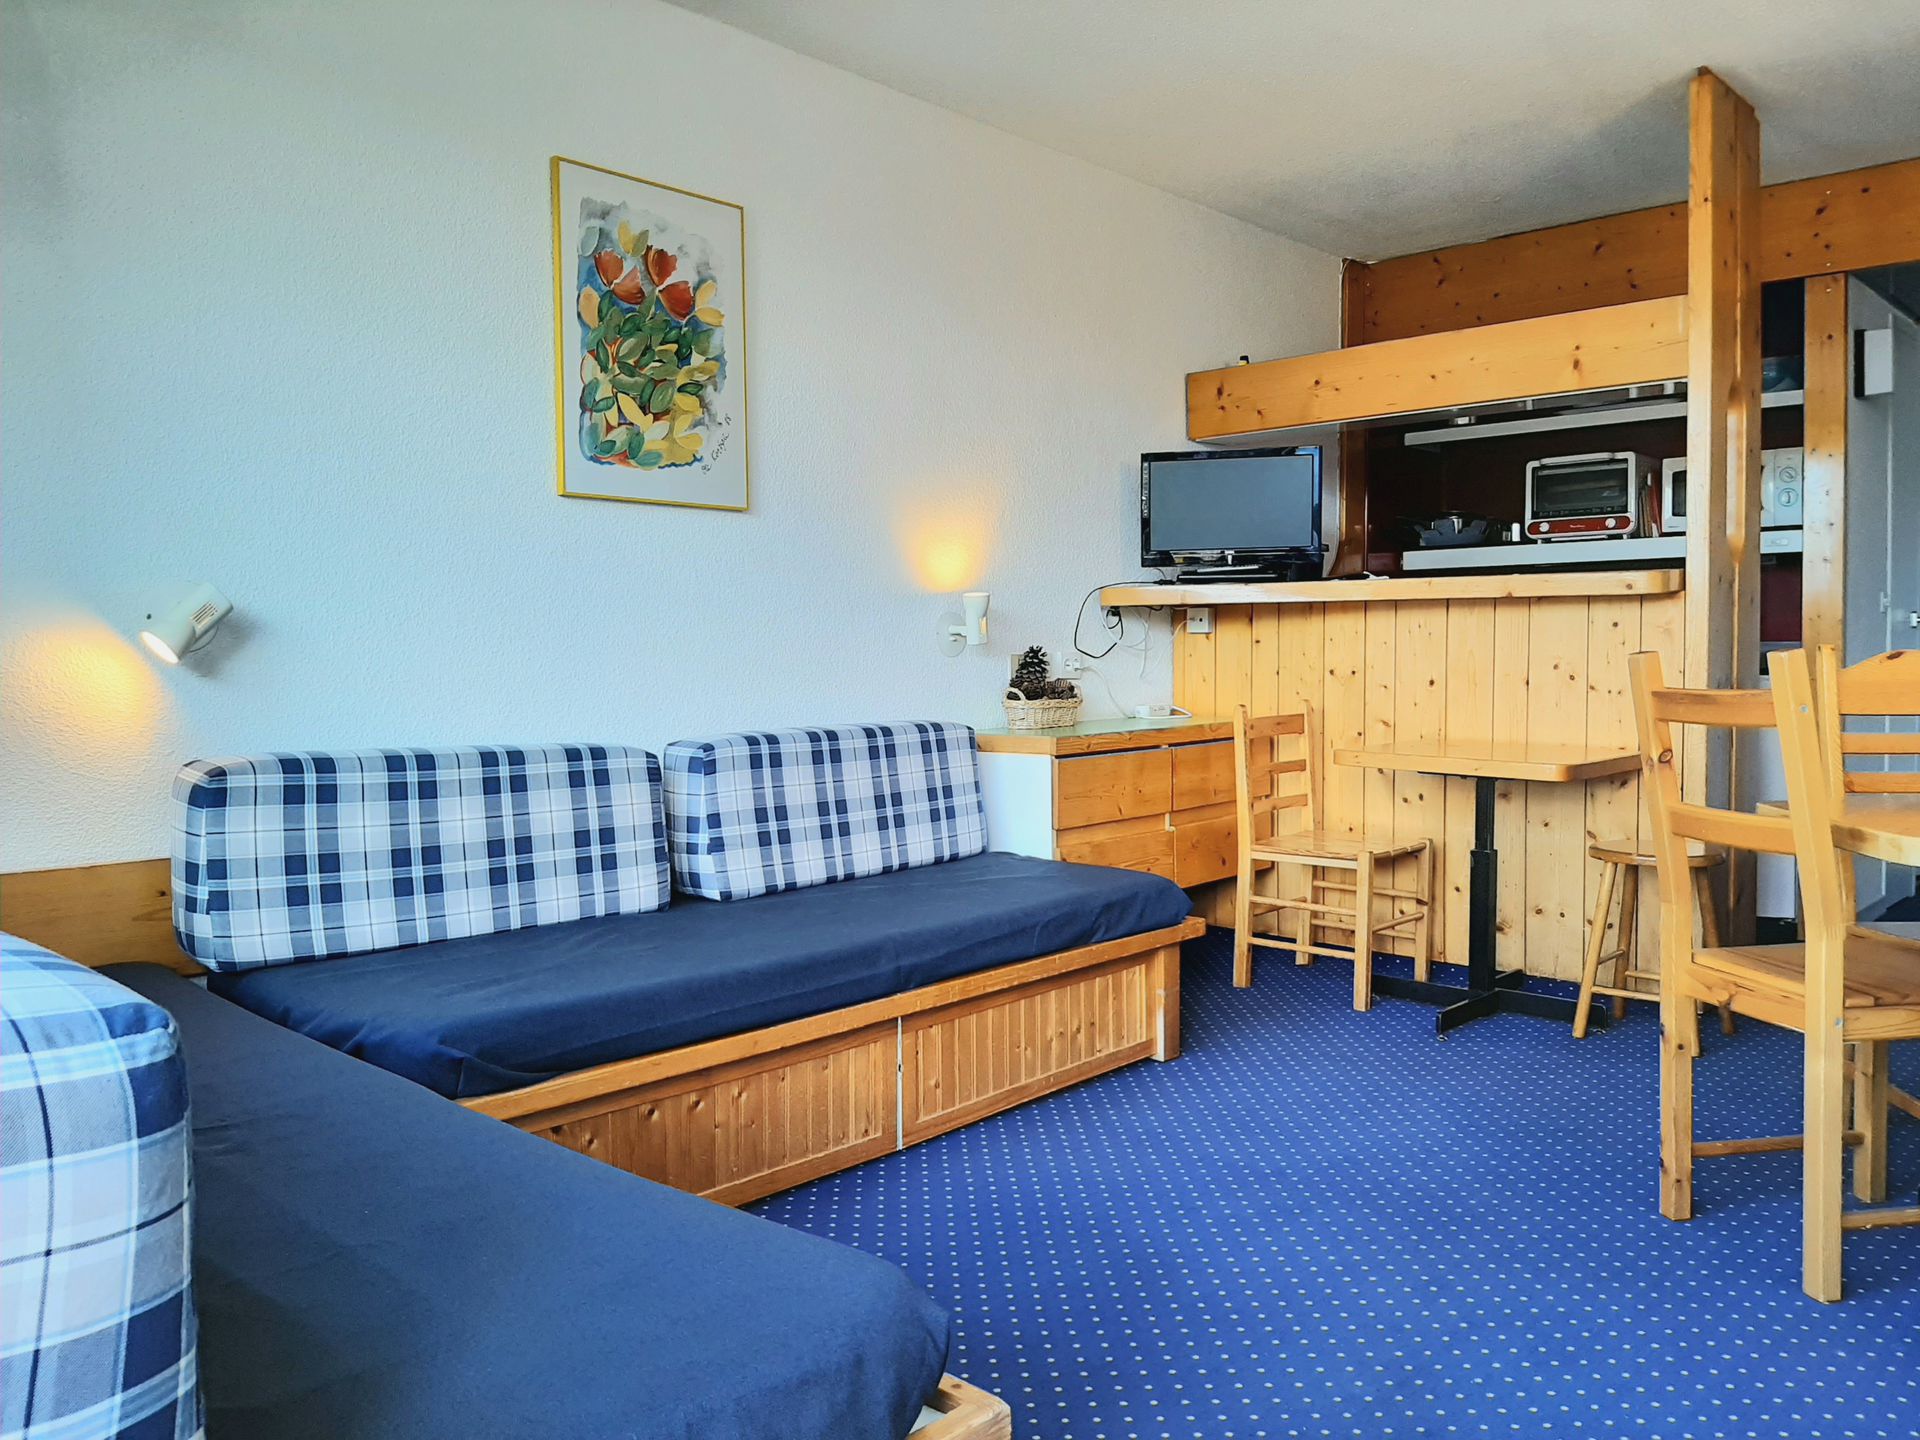 2 rooms 5 people - travelski home choice - Apartements TOURNAVELLES 2 - Les Arcs 1800